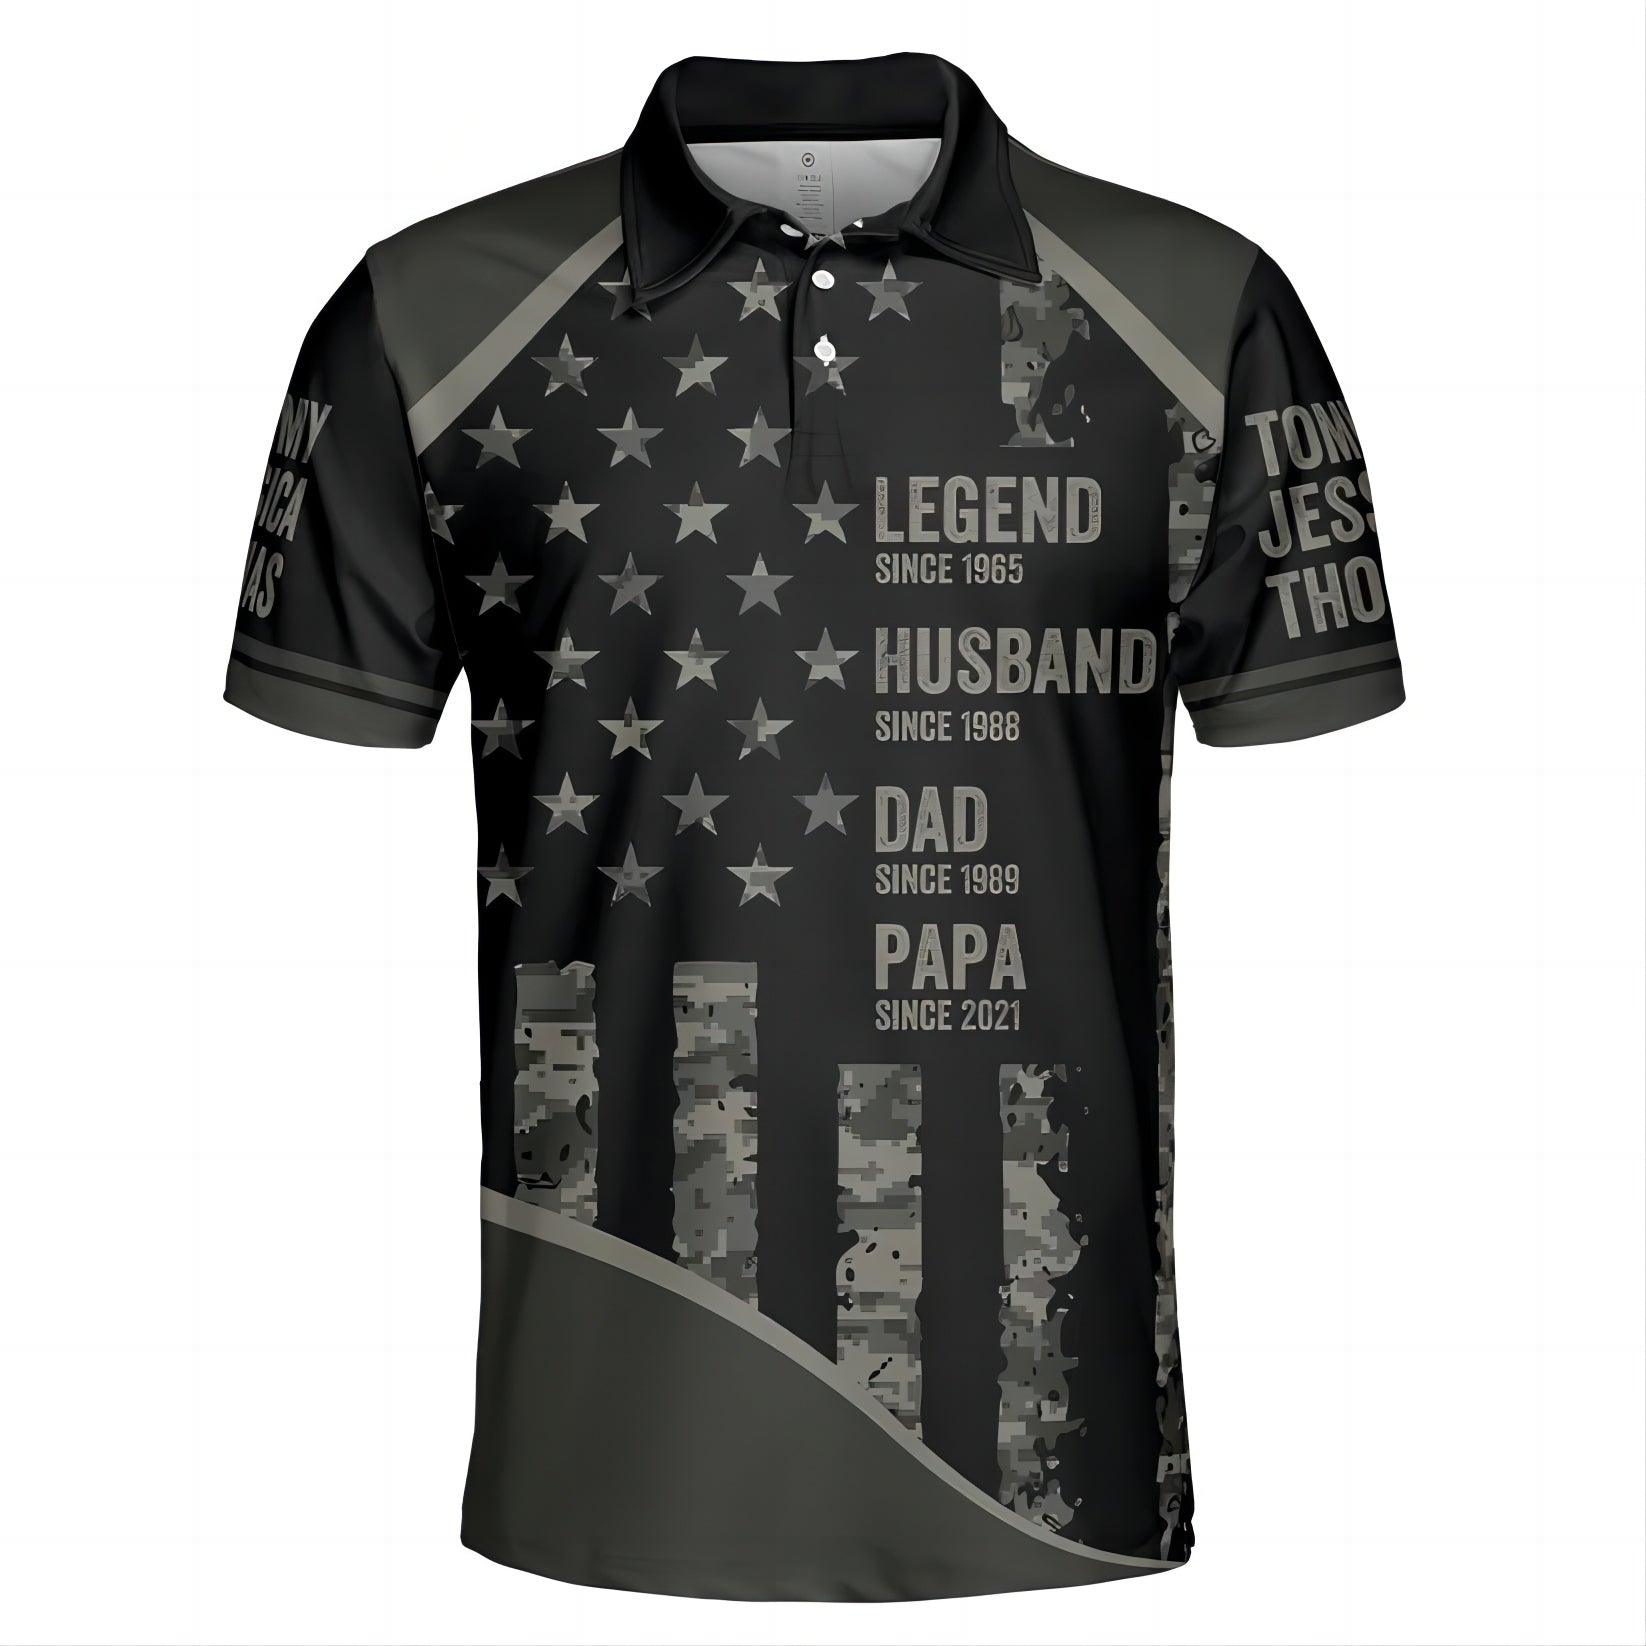 Personalized Polo Shirt - Legend, Husband, Dad, Papa